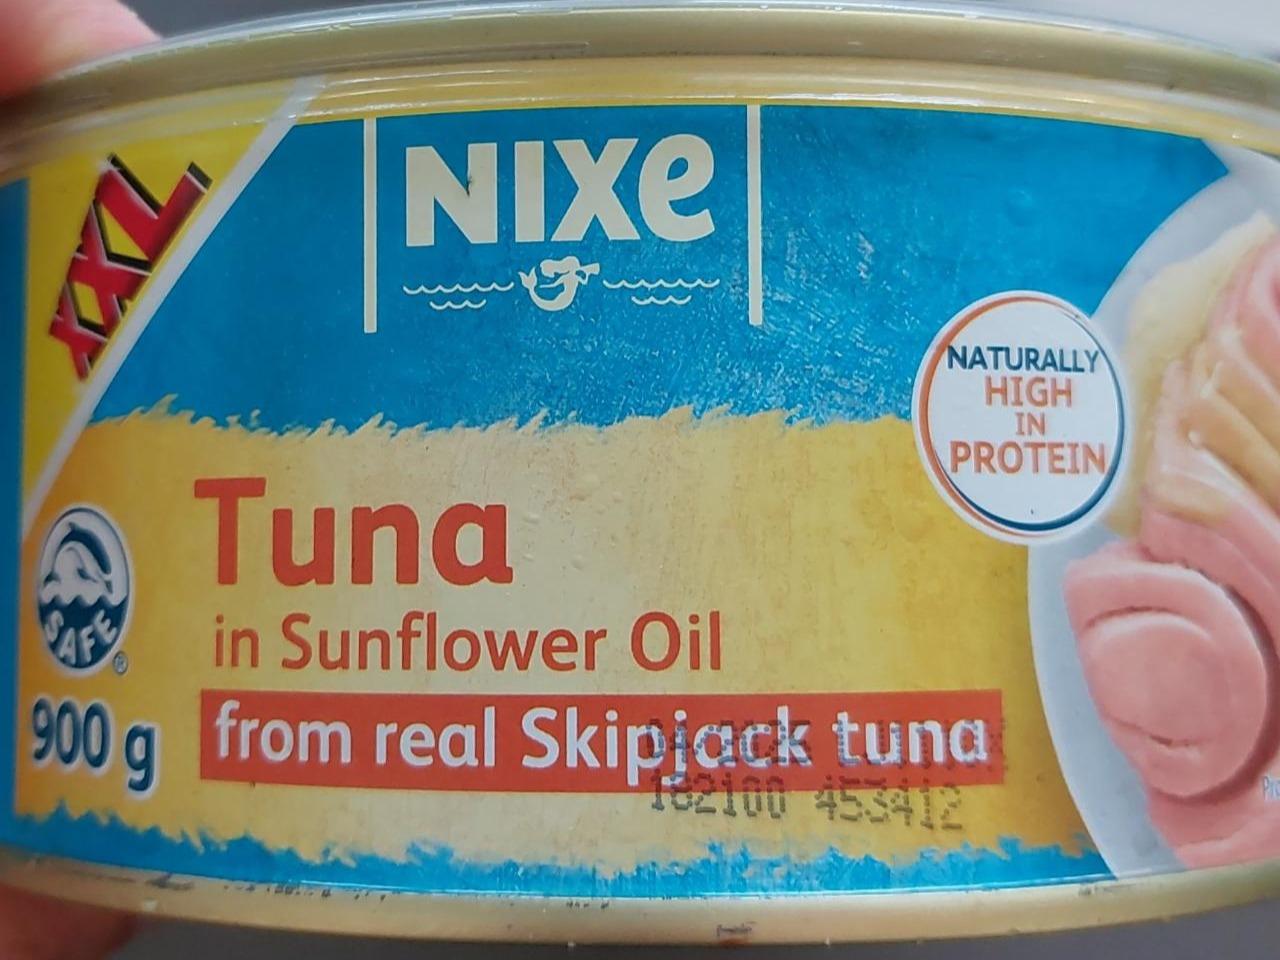 Fotografie - Tuna in Sunflower Oil from real Skipjack tuna XXL Nixe